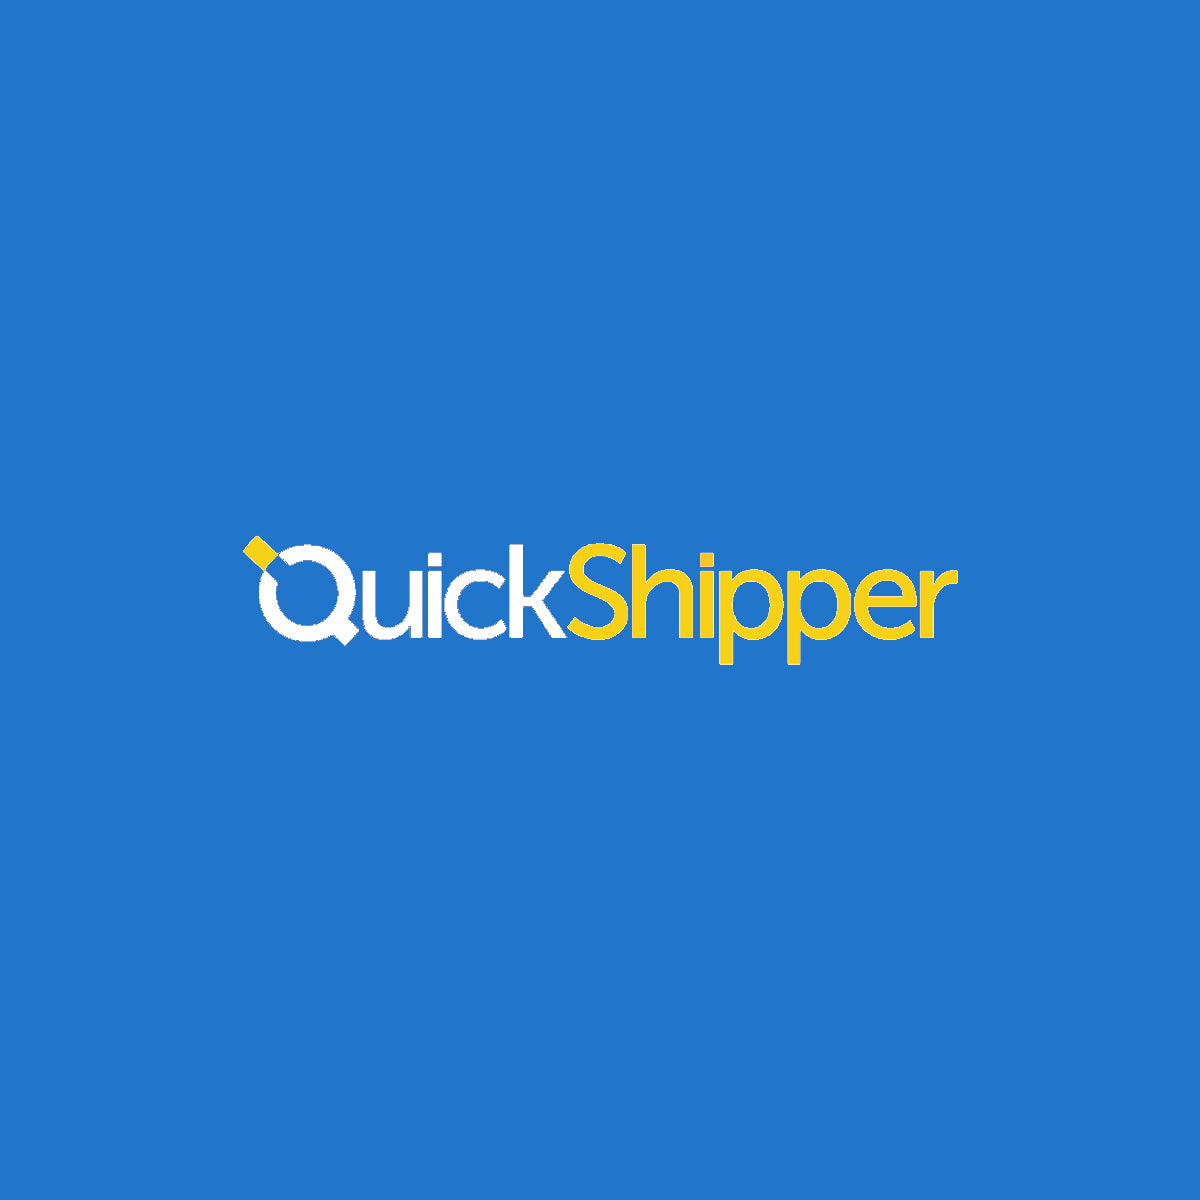 ShipExpress by Quickshipper